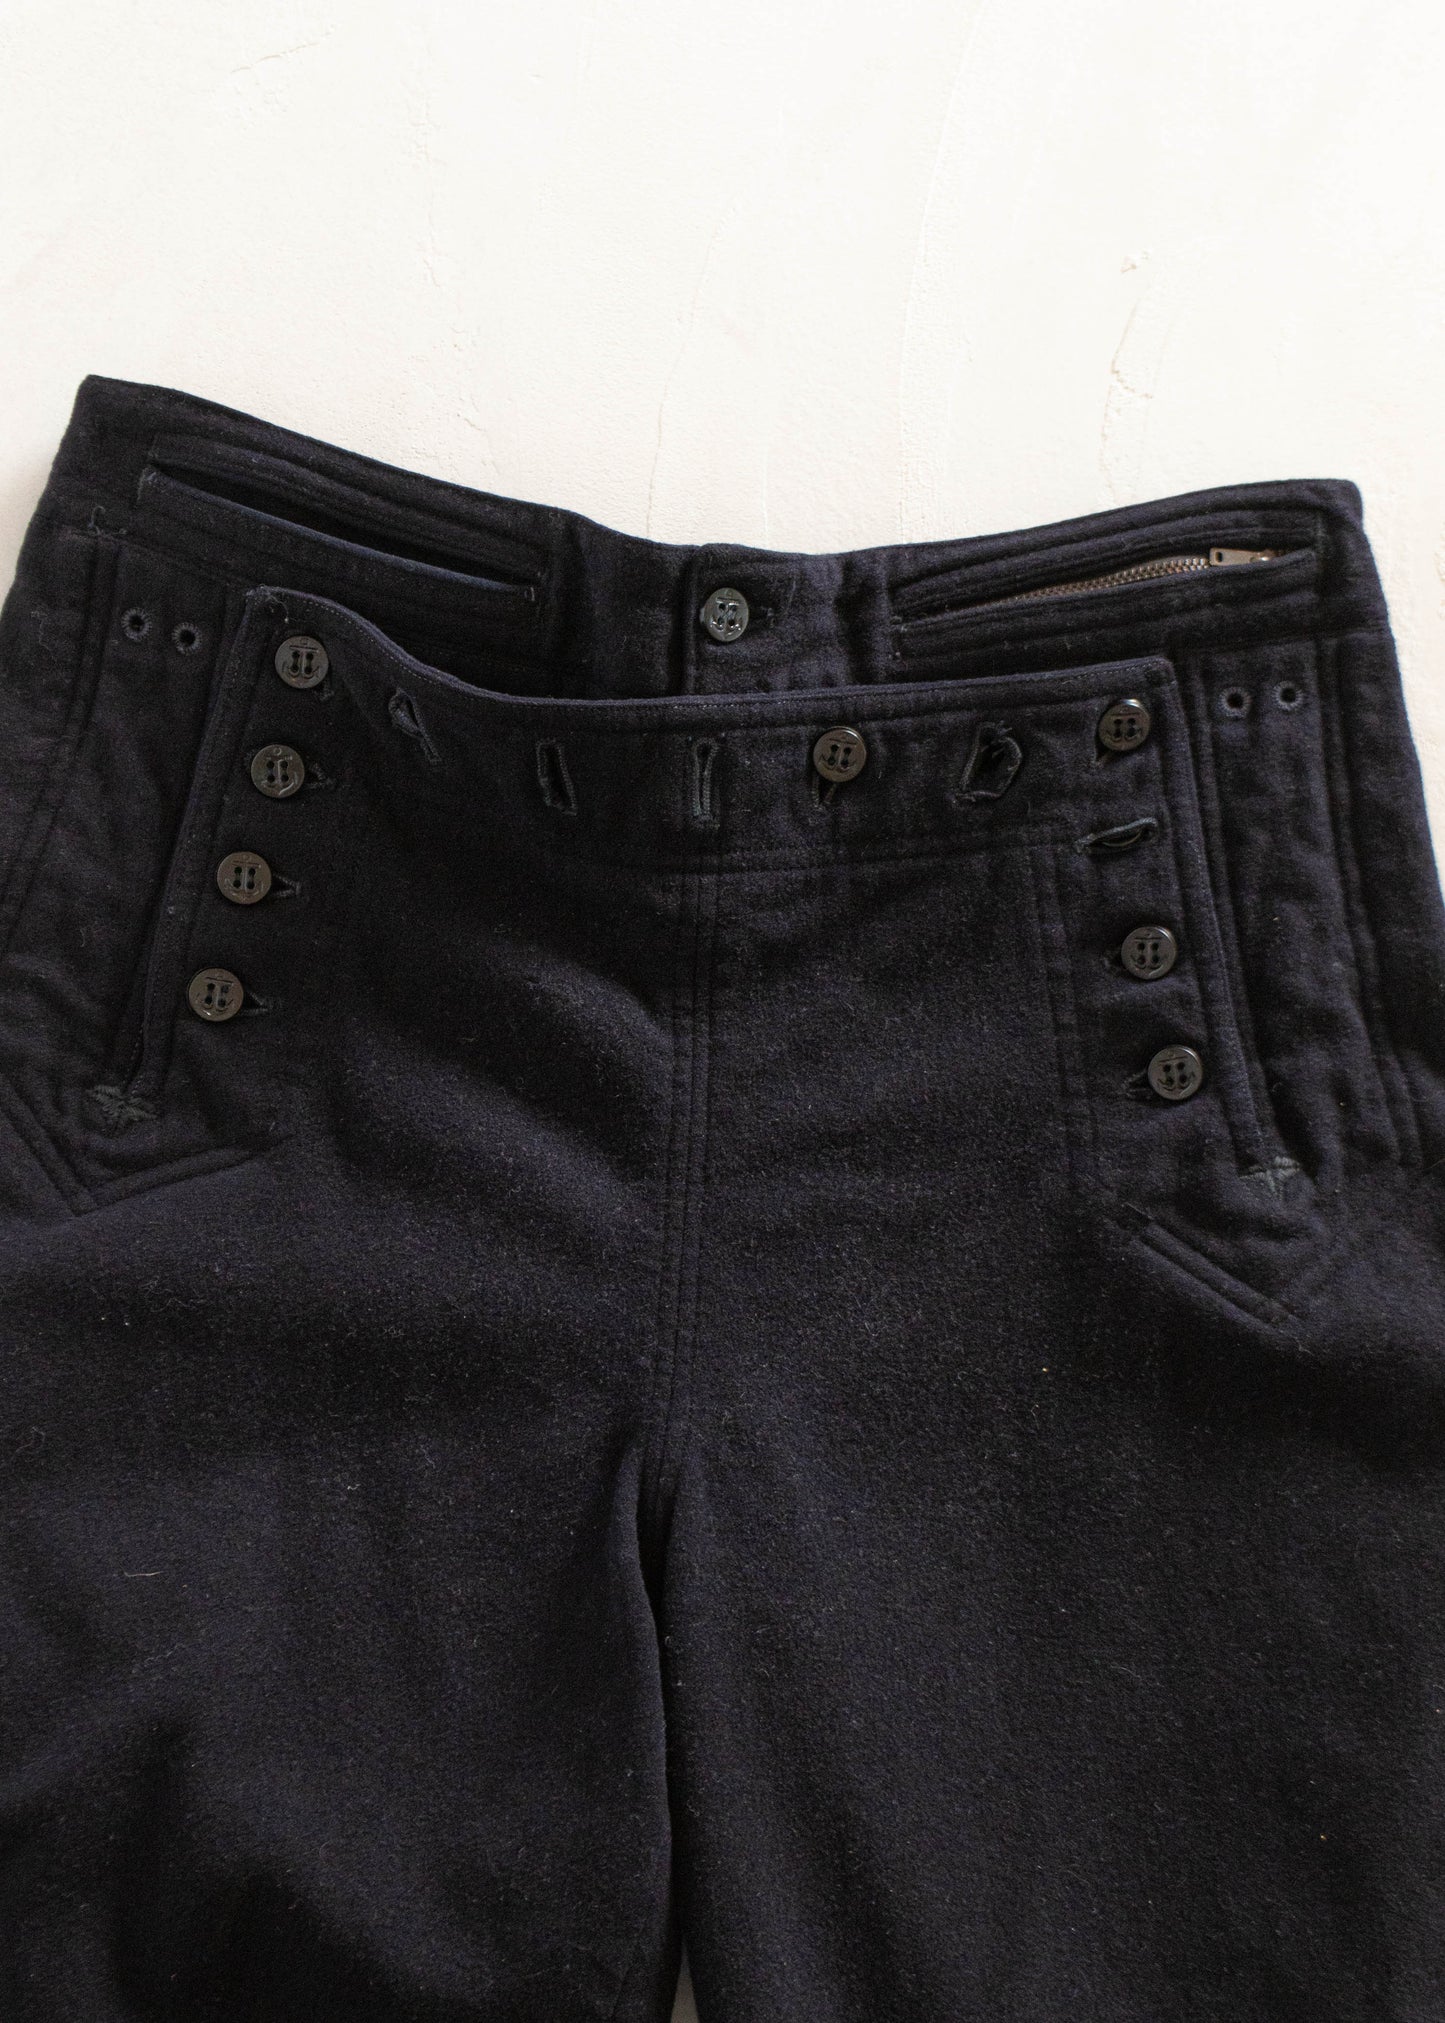 1940s US Navy Sailor Pants Size Women's 29 Men's 32